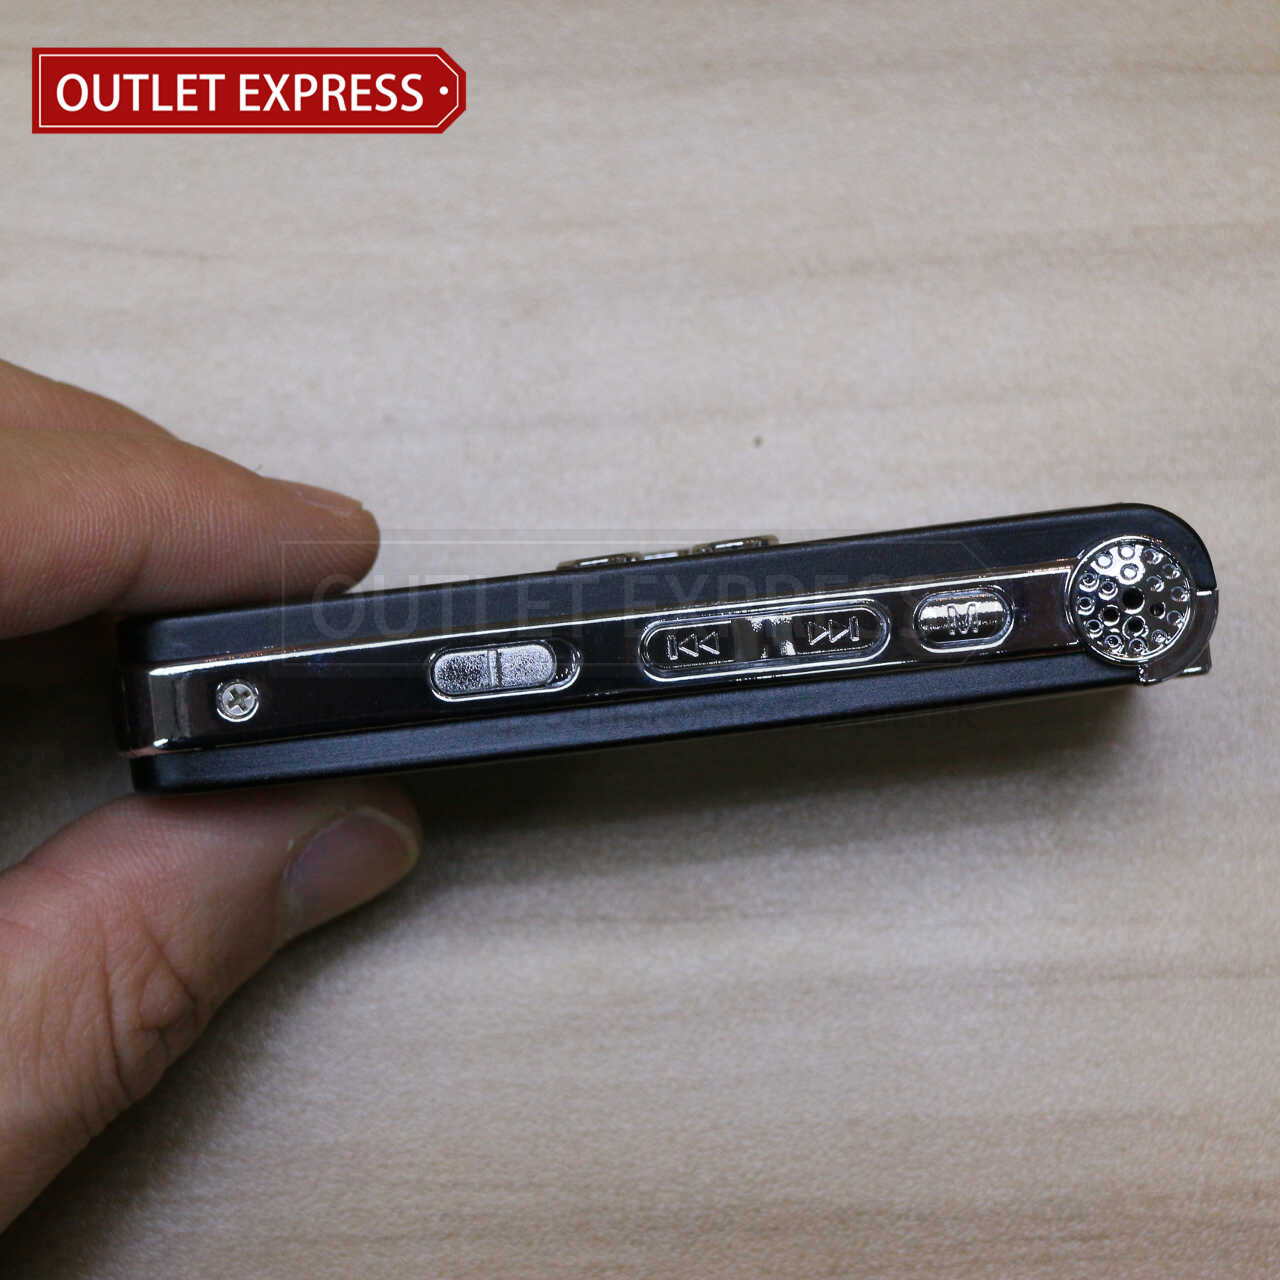 8GB USB高清數碼錄音筆 | MP3播放器 按鈕- Outlet Express HK生活百貨城實拍相片